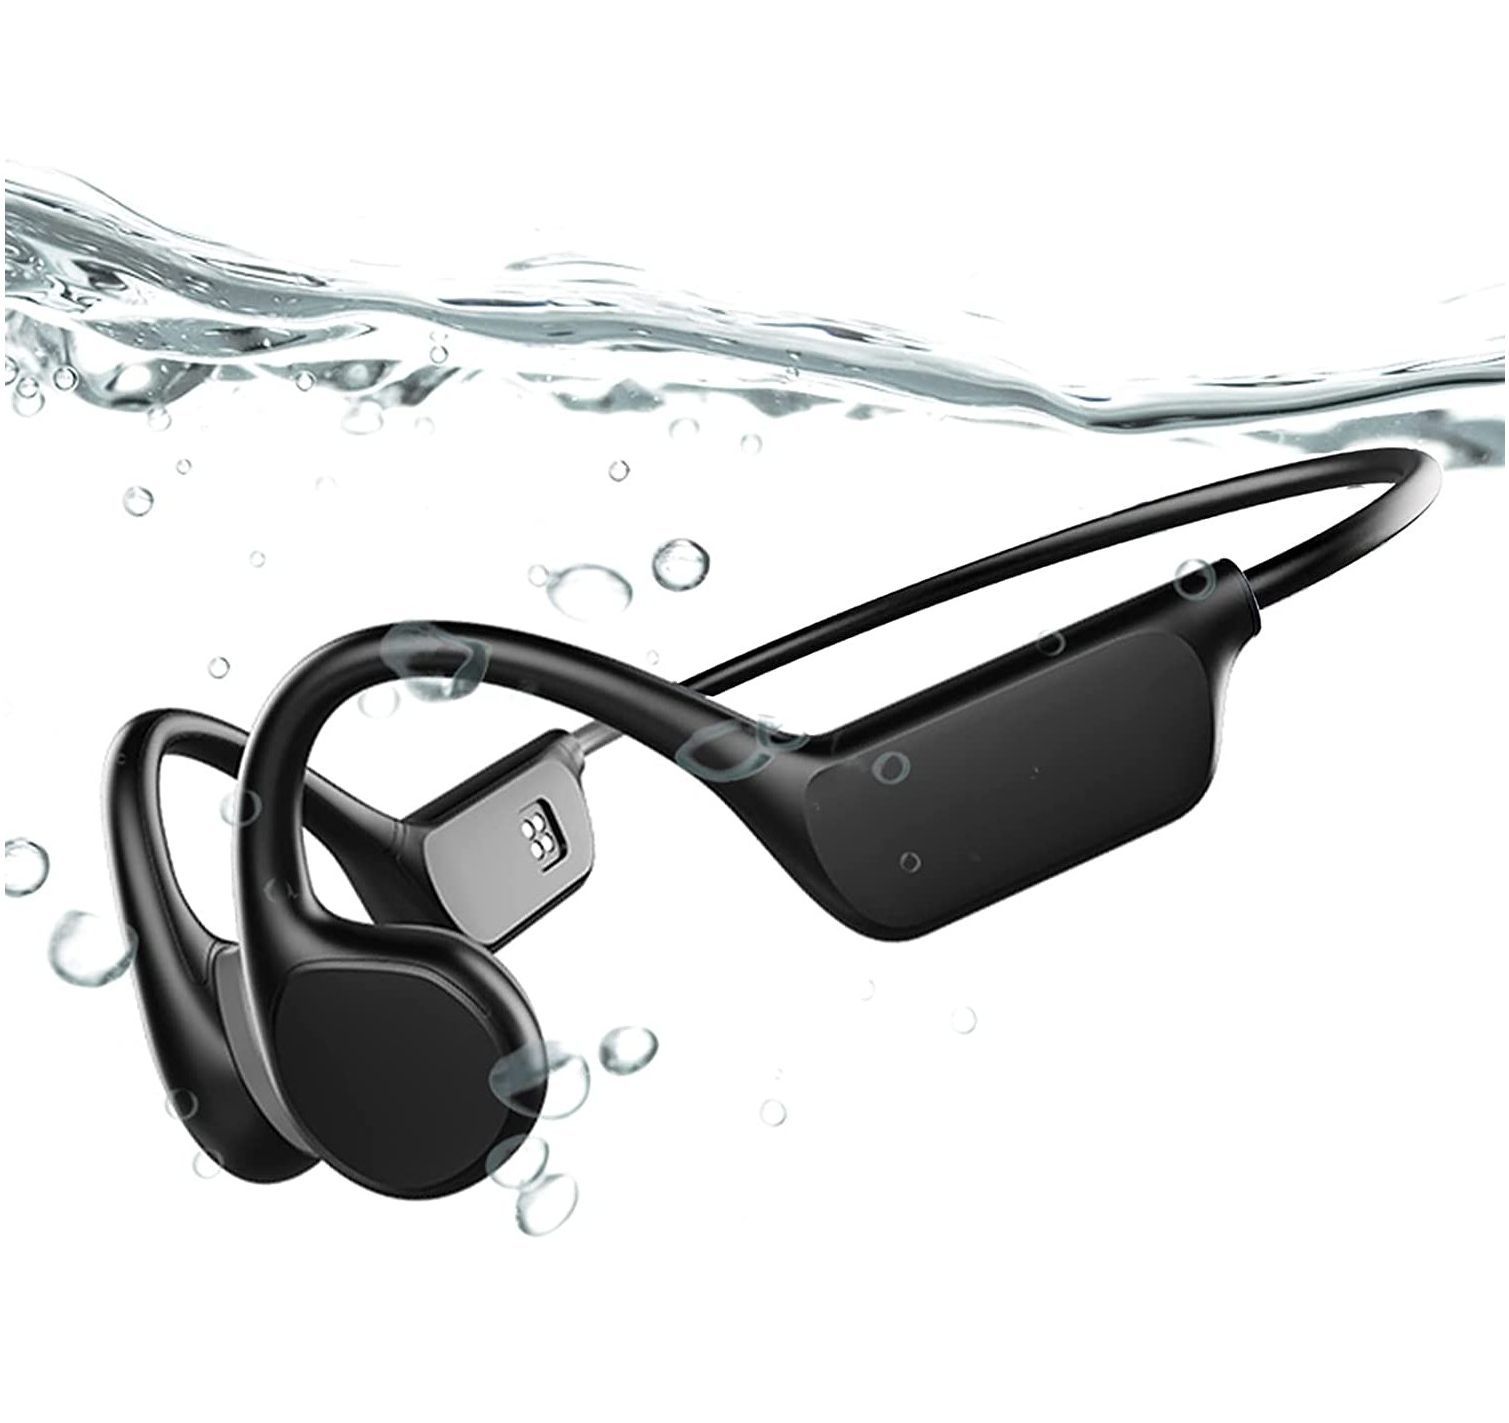 Gogailen bone conduction swimming waterproof headphones 